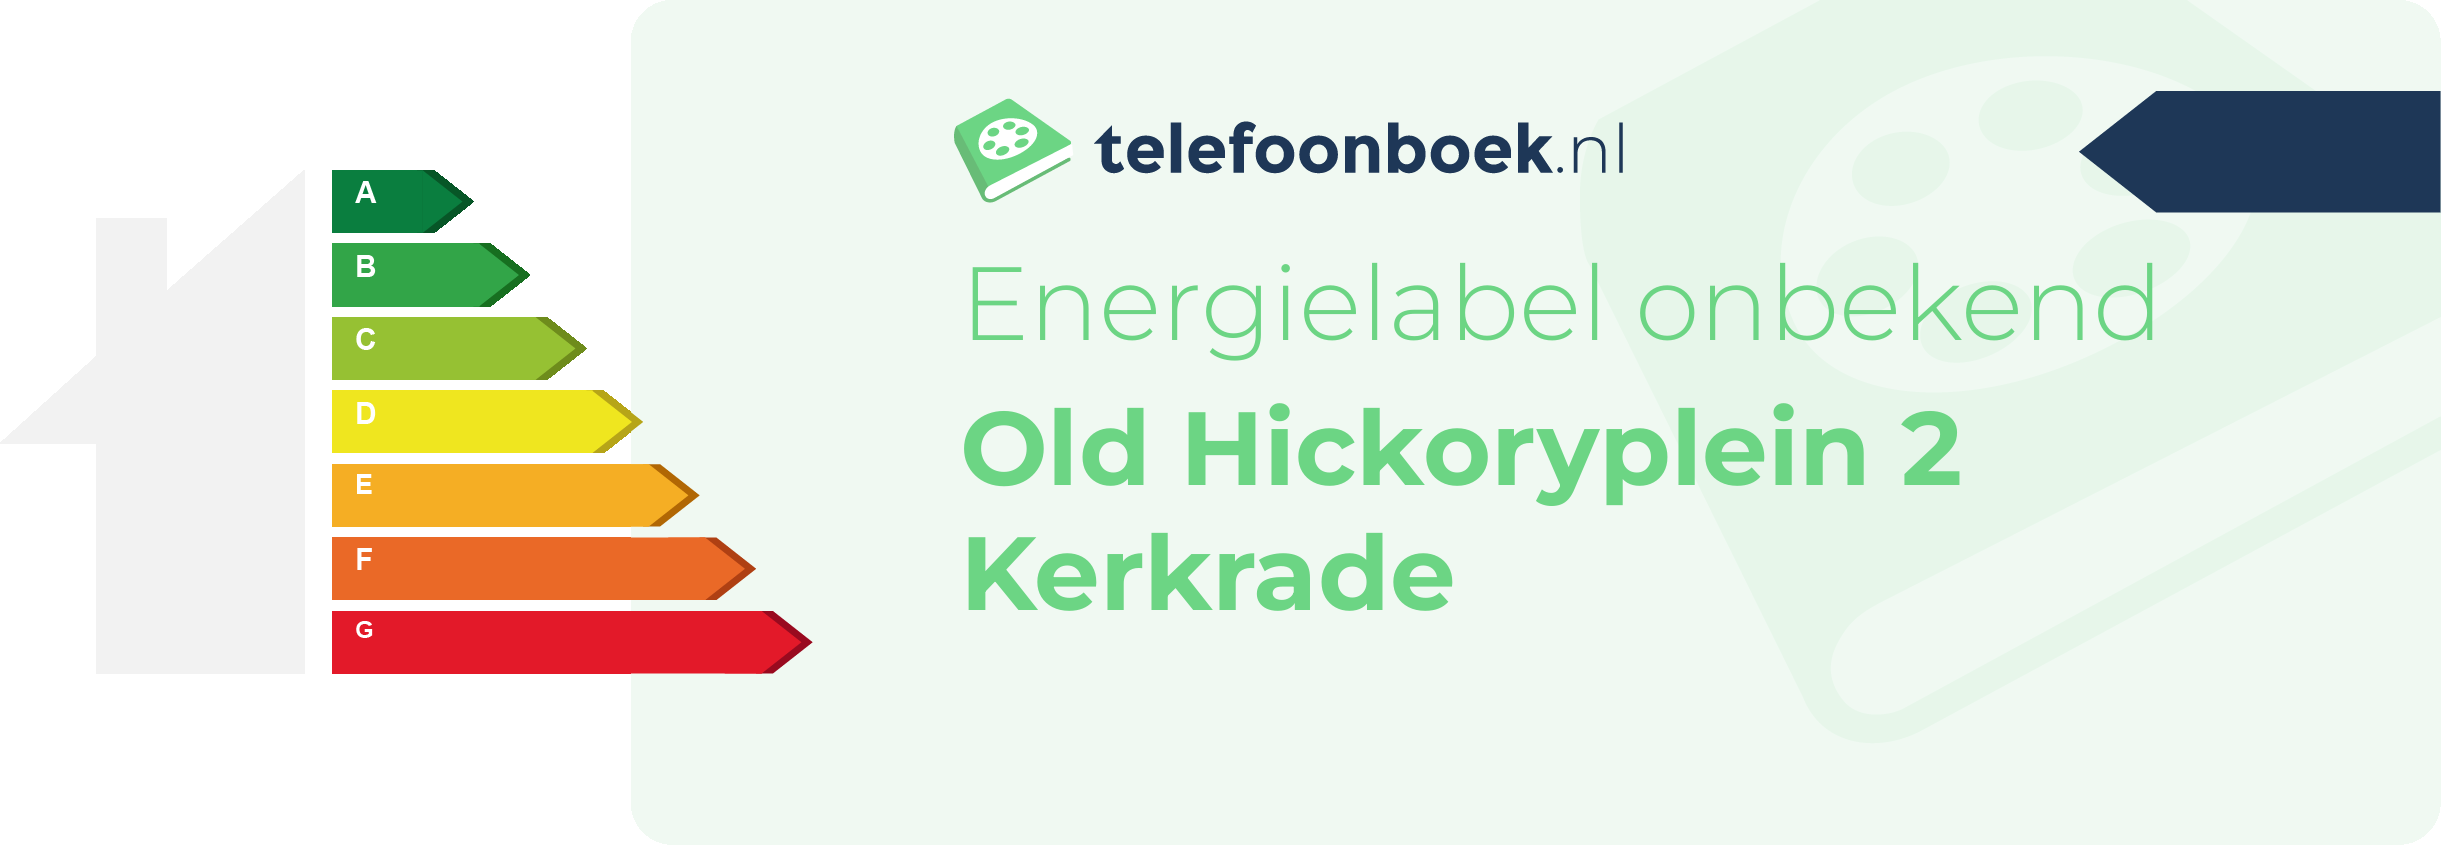 Energielabel Old Hickoryplein 2 Kerkrade